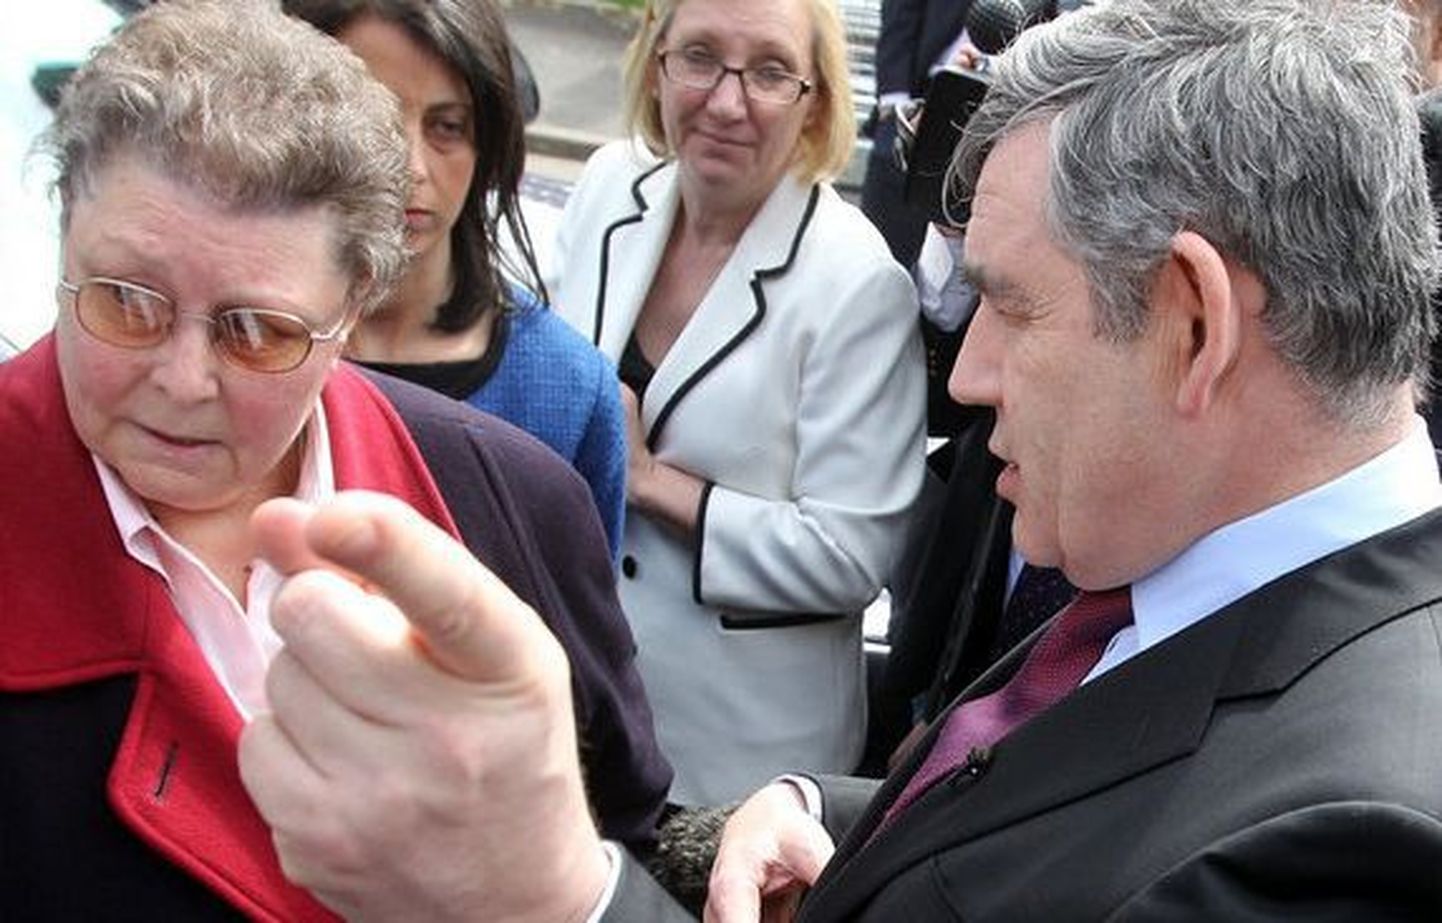 Briti peaminister Gordon Brown ja valija Gillian Duffy